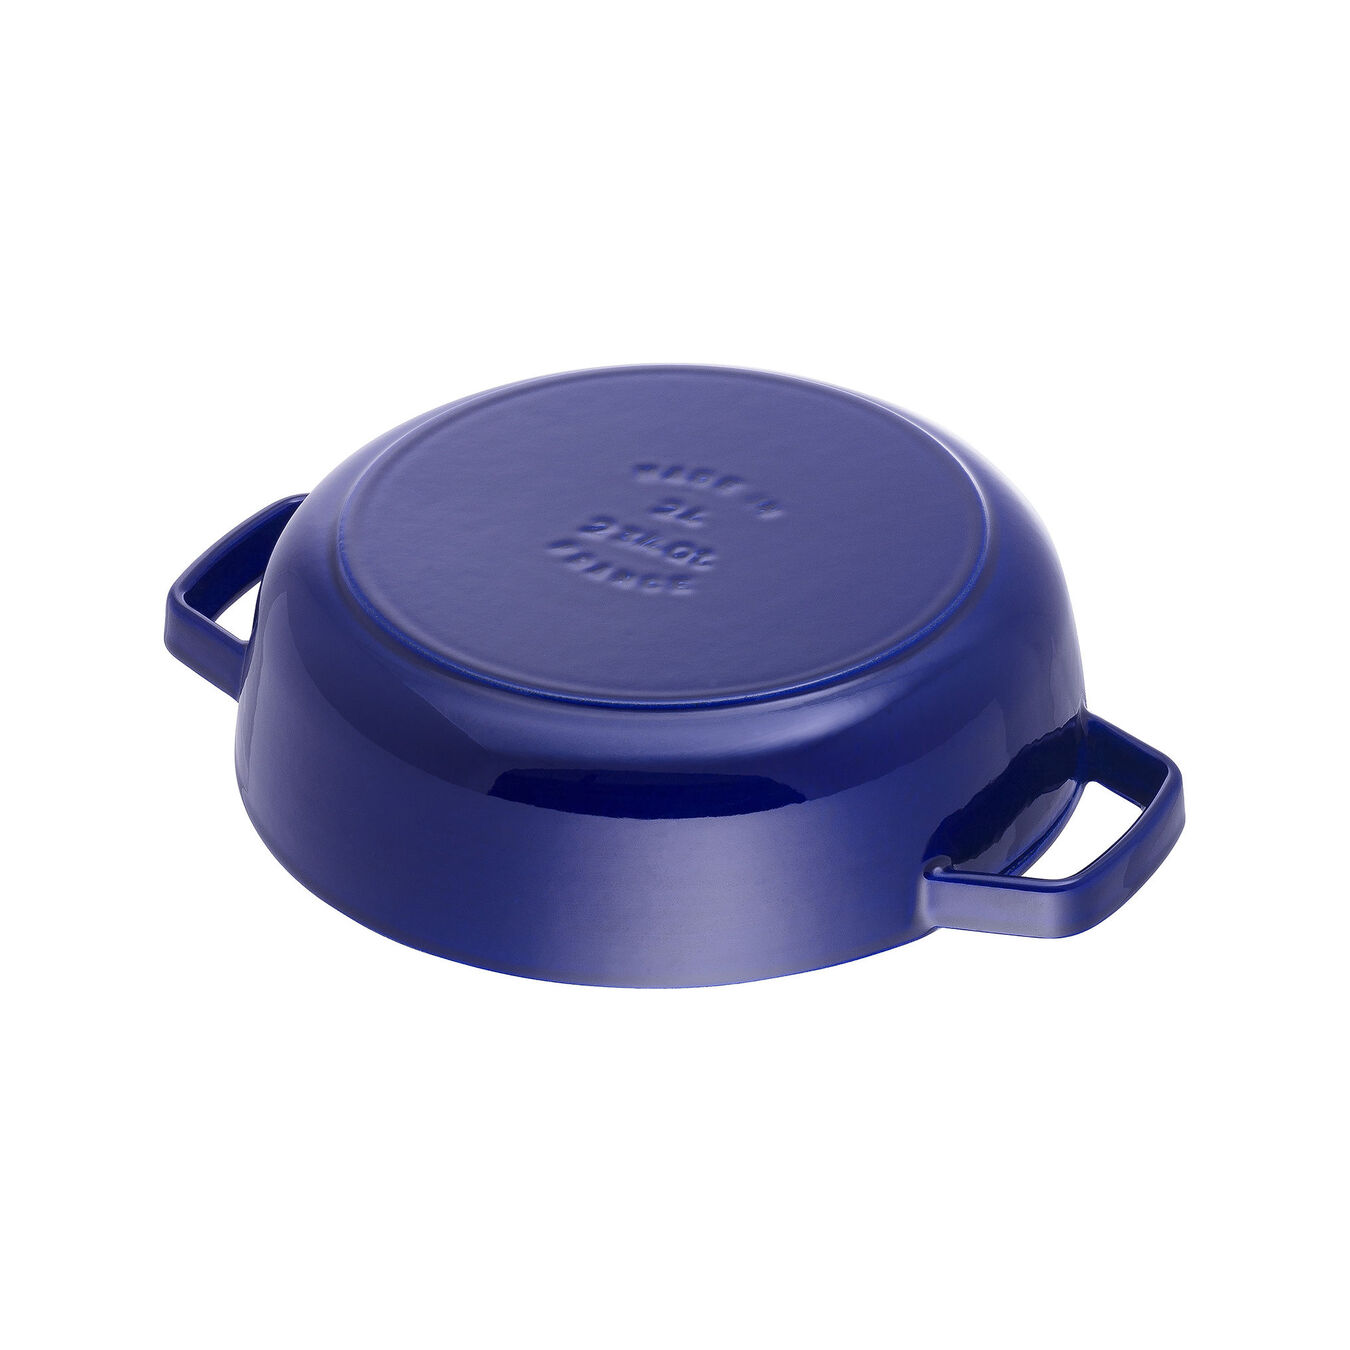 28 cm round Cast iron Saute pan Chistera dark-blue,,large 4